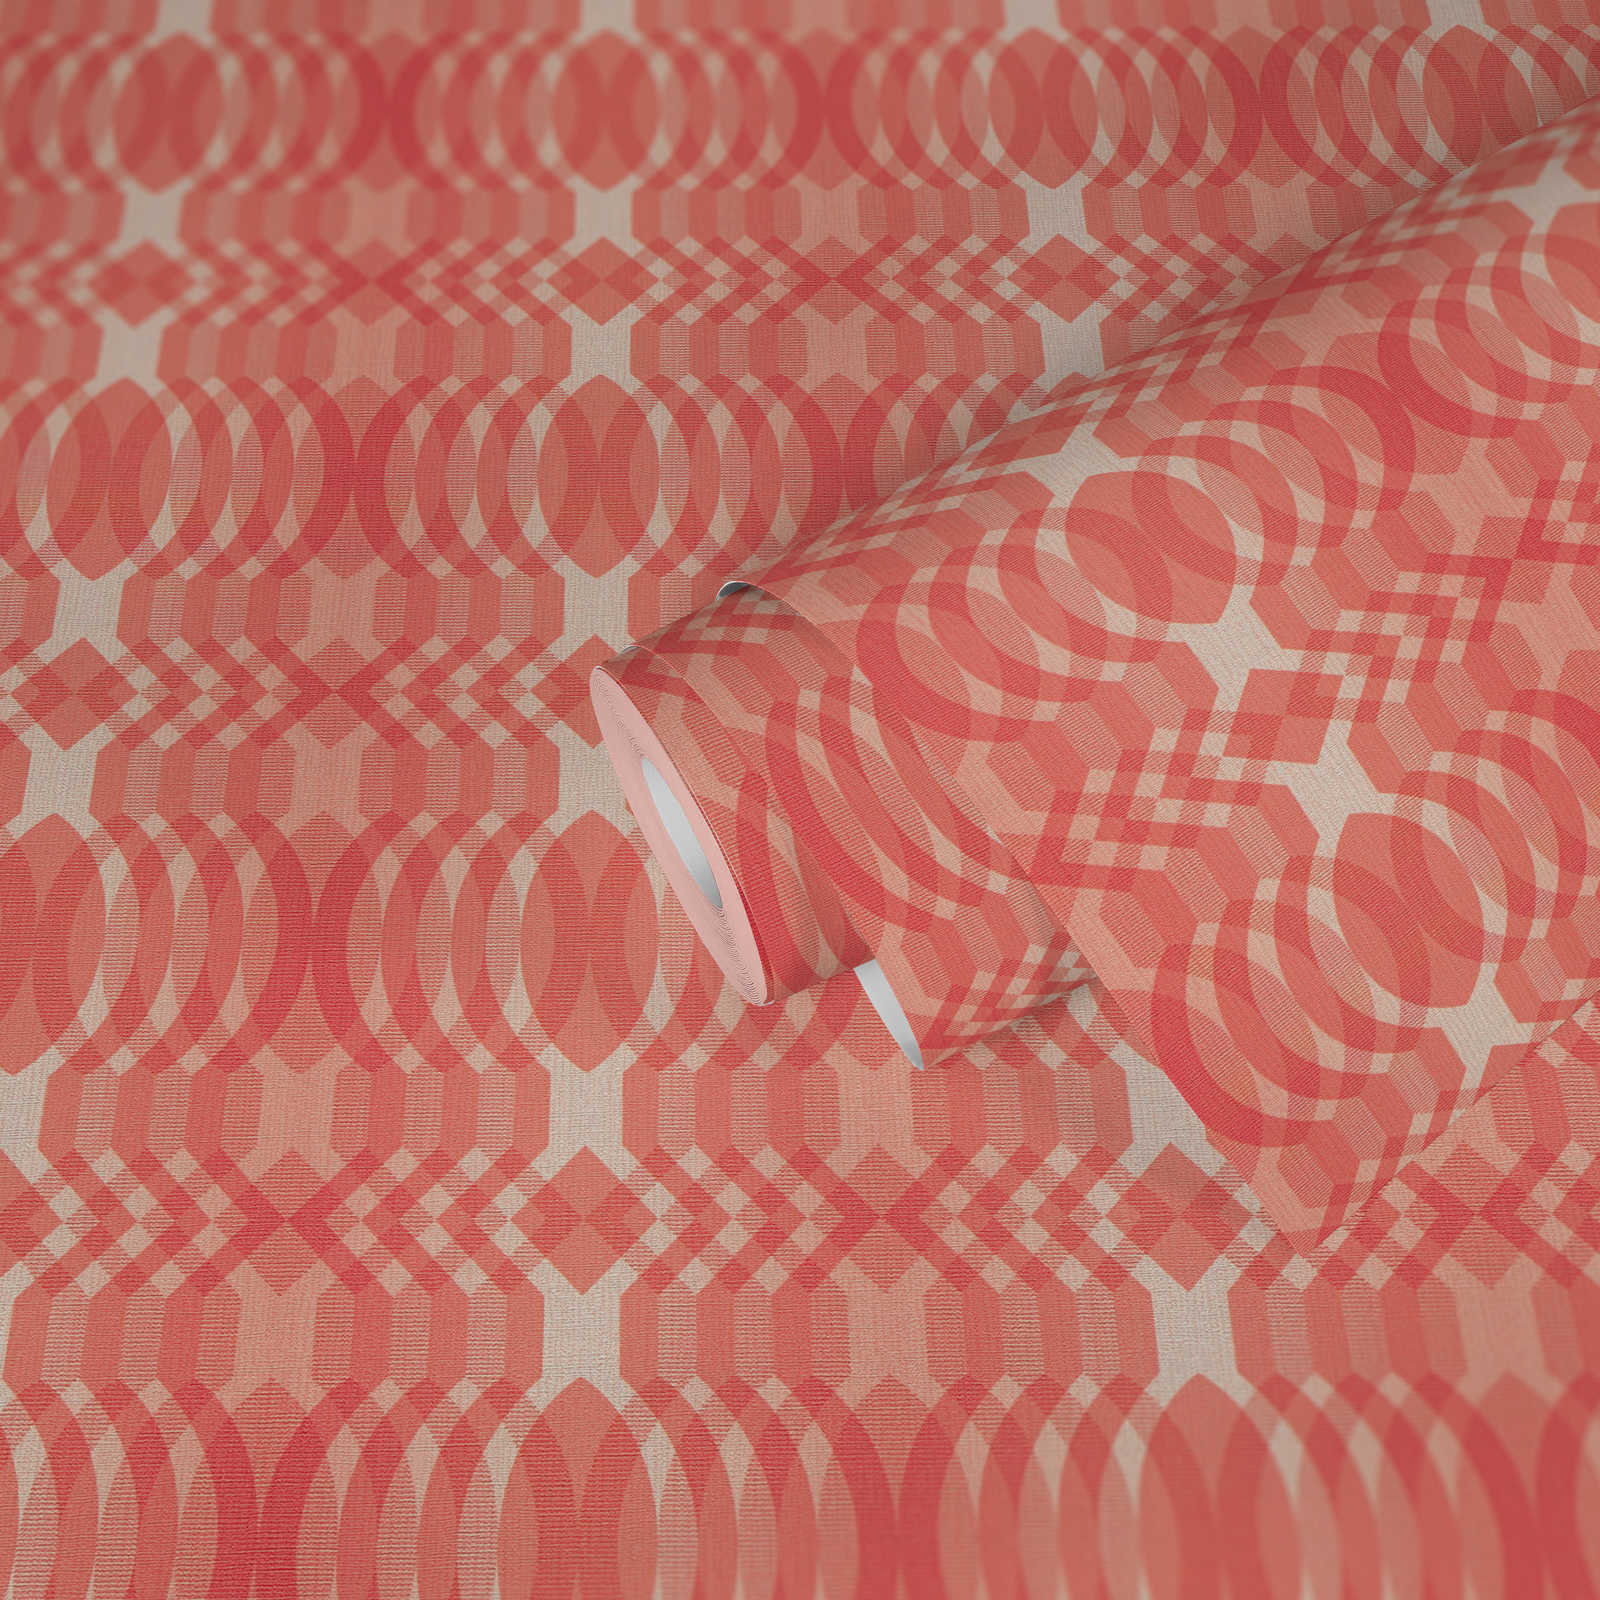             Geometric pattern on non-woven wallpaper in retro style - red, cream, white
        